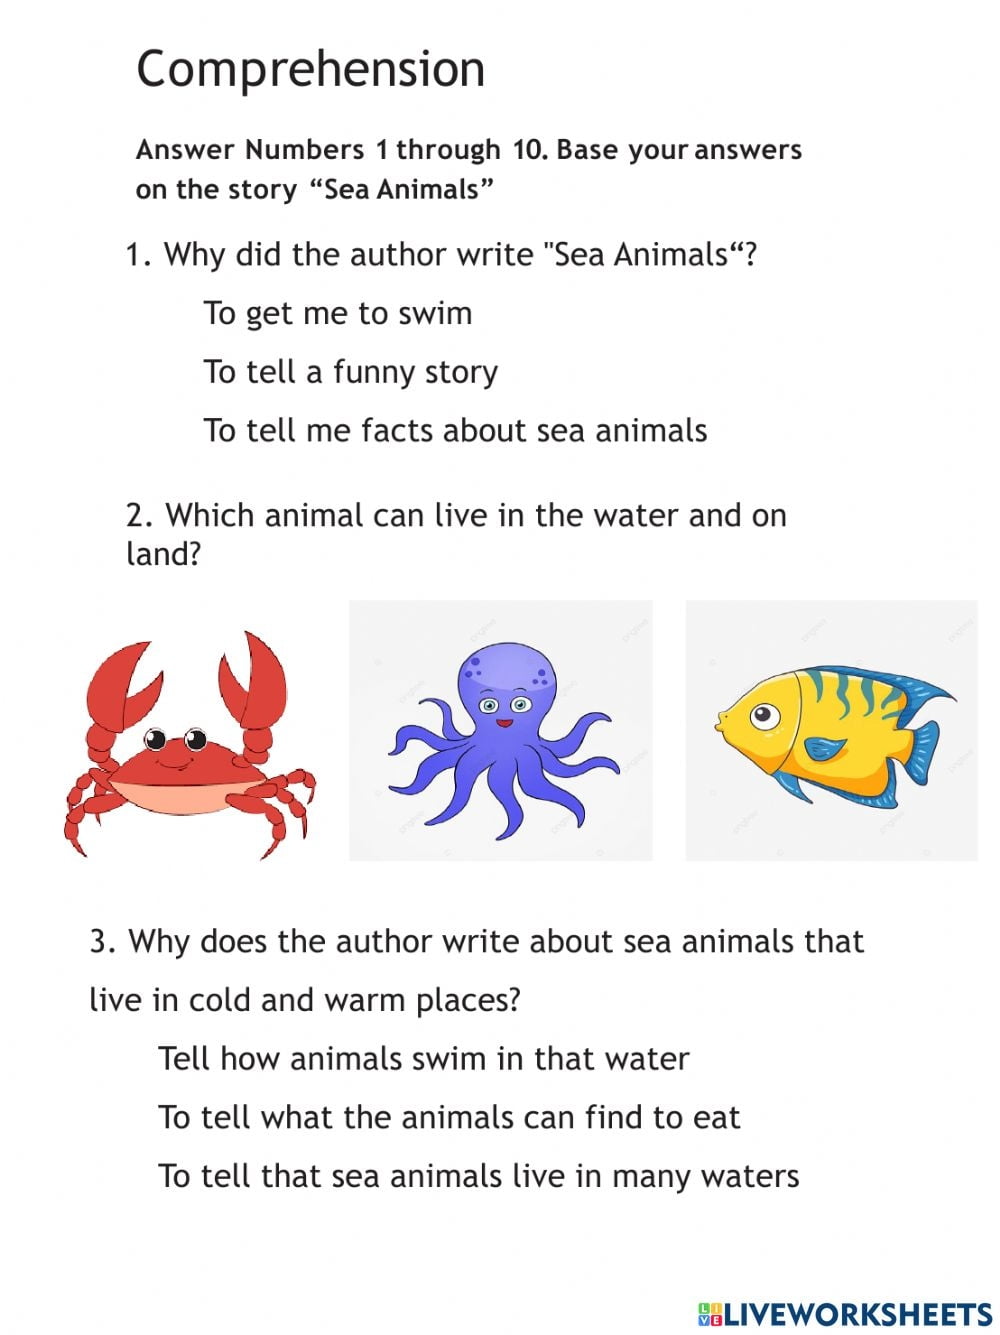 Sea Animals Reading Comprehension Worksheets